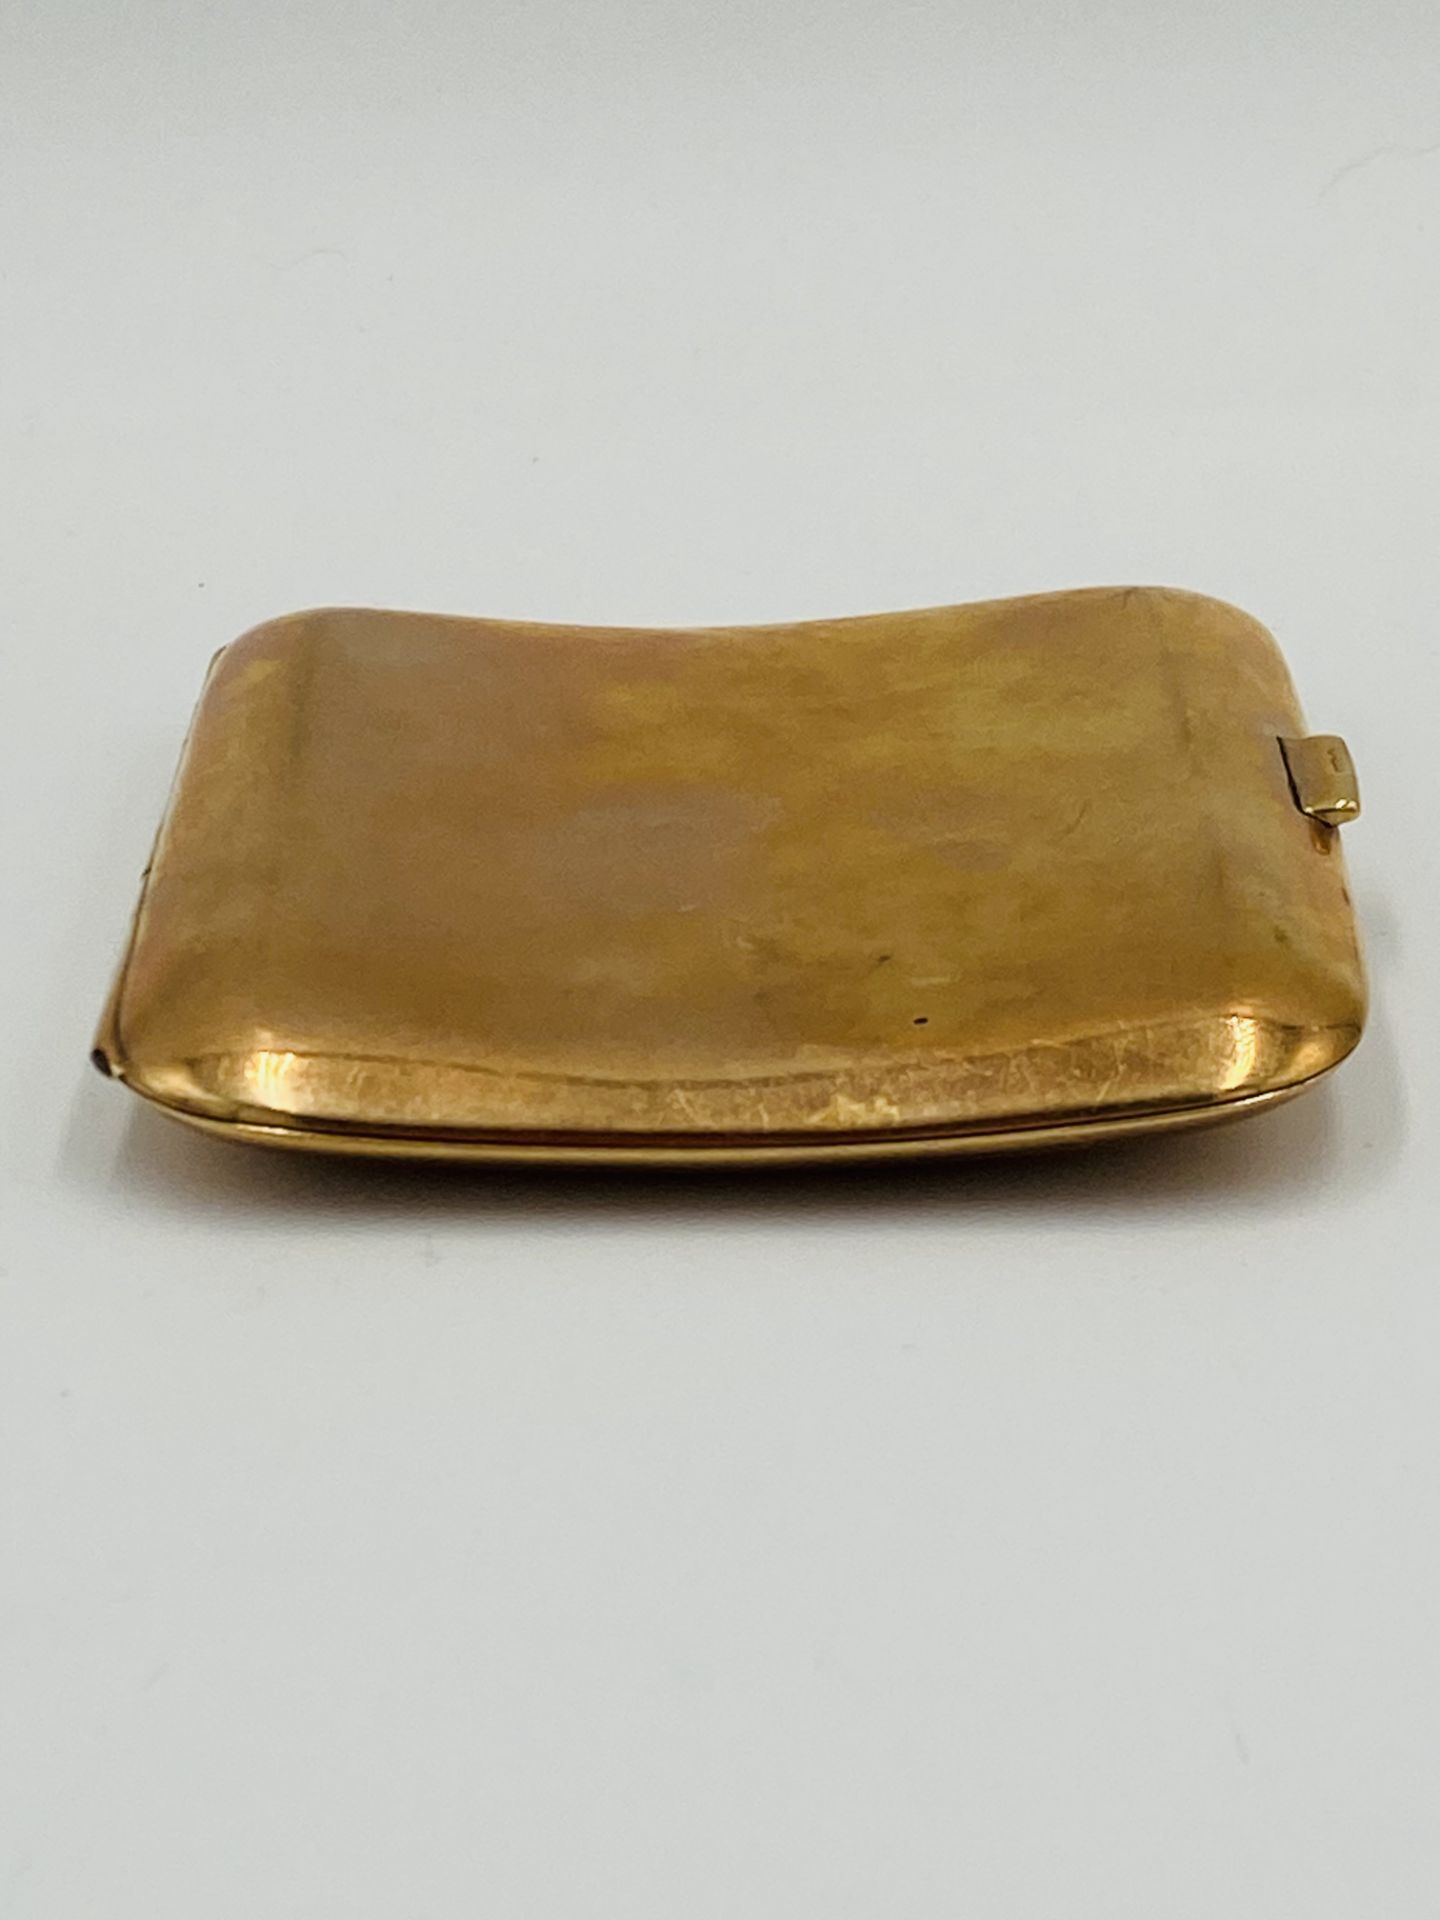 9ct gold cigarette case, 71.3g - Image 6 of 7